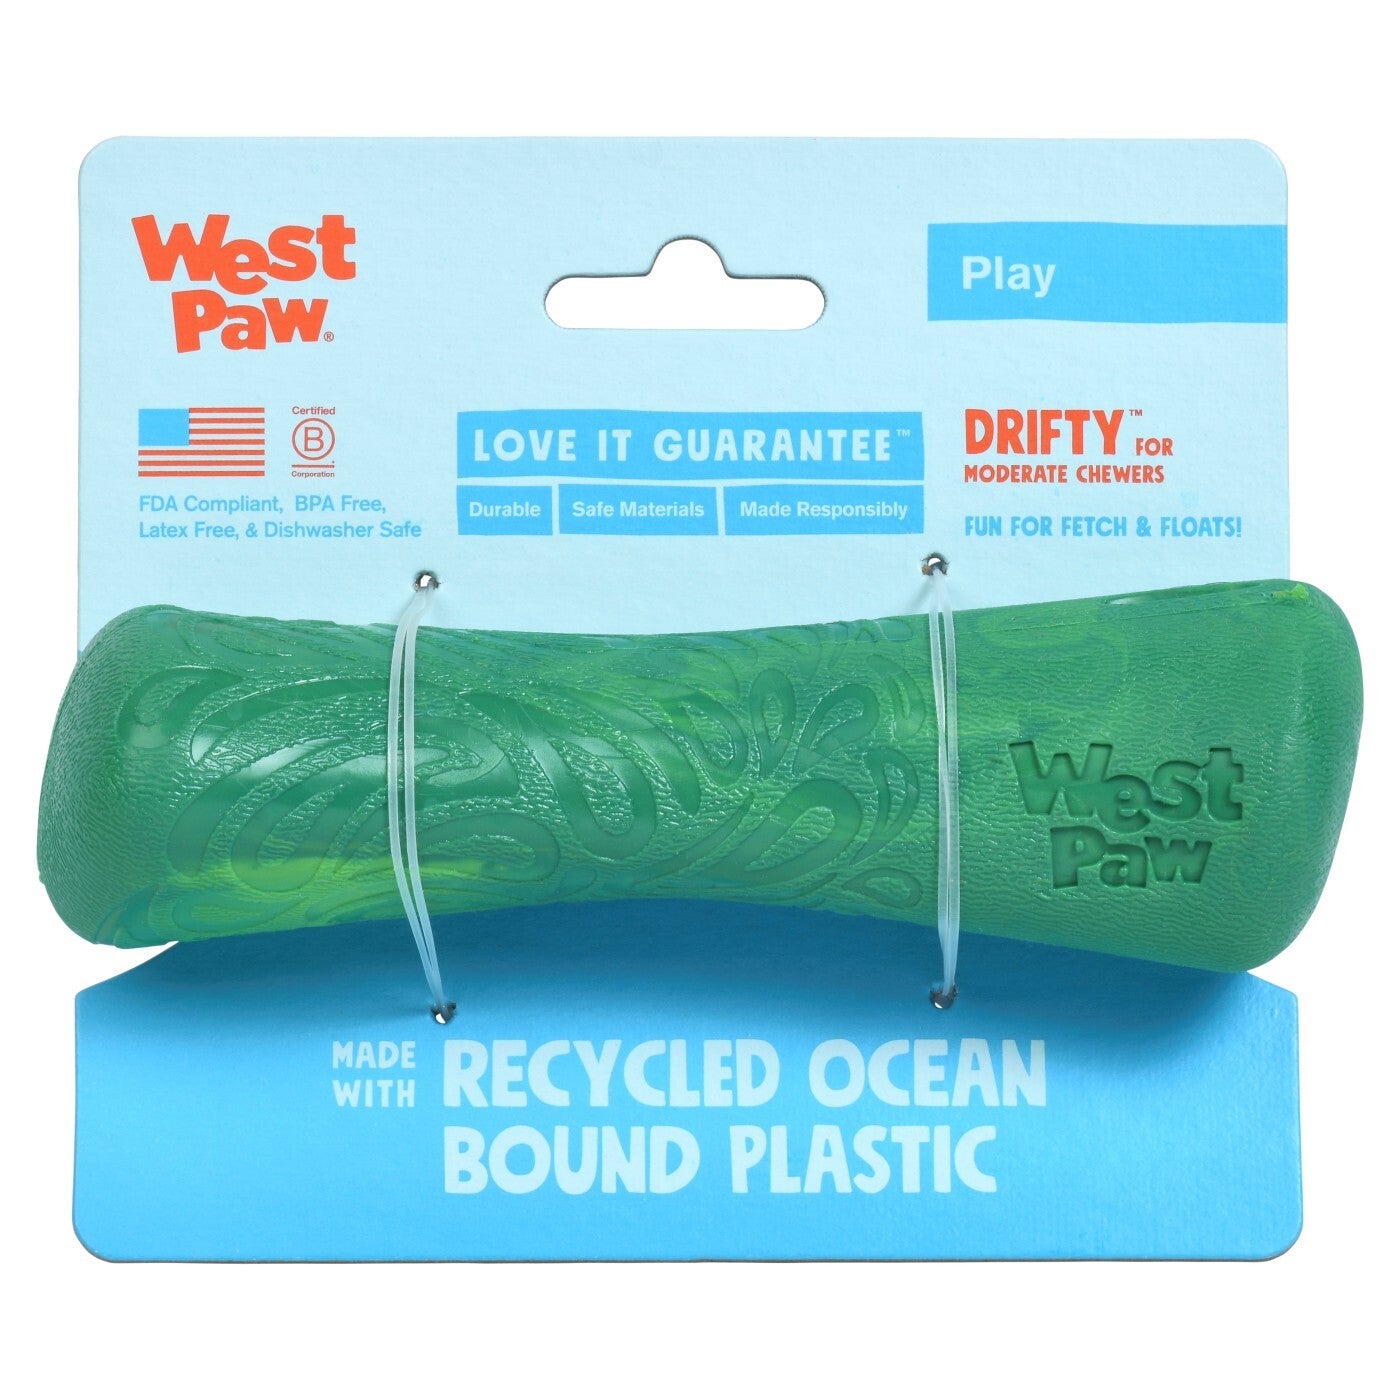 West Paw Seaflex Recycled Plastic Fetch Dog Toy - Drifty